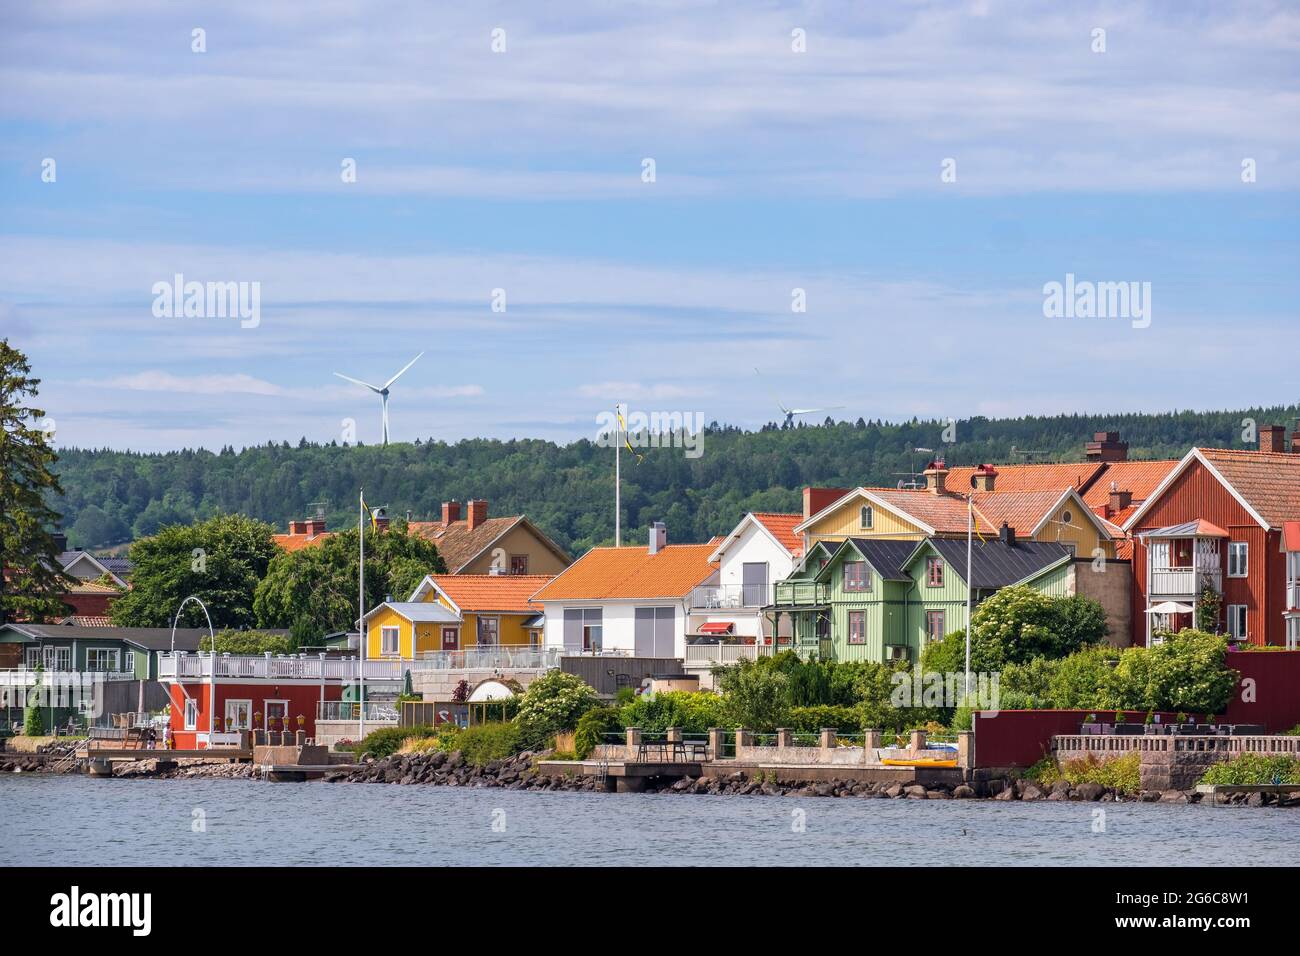 Case sul lungolago in Svezia Foto Stock